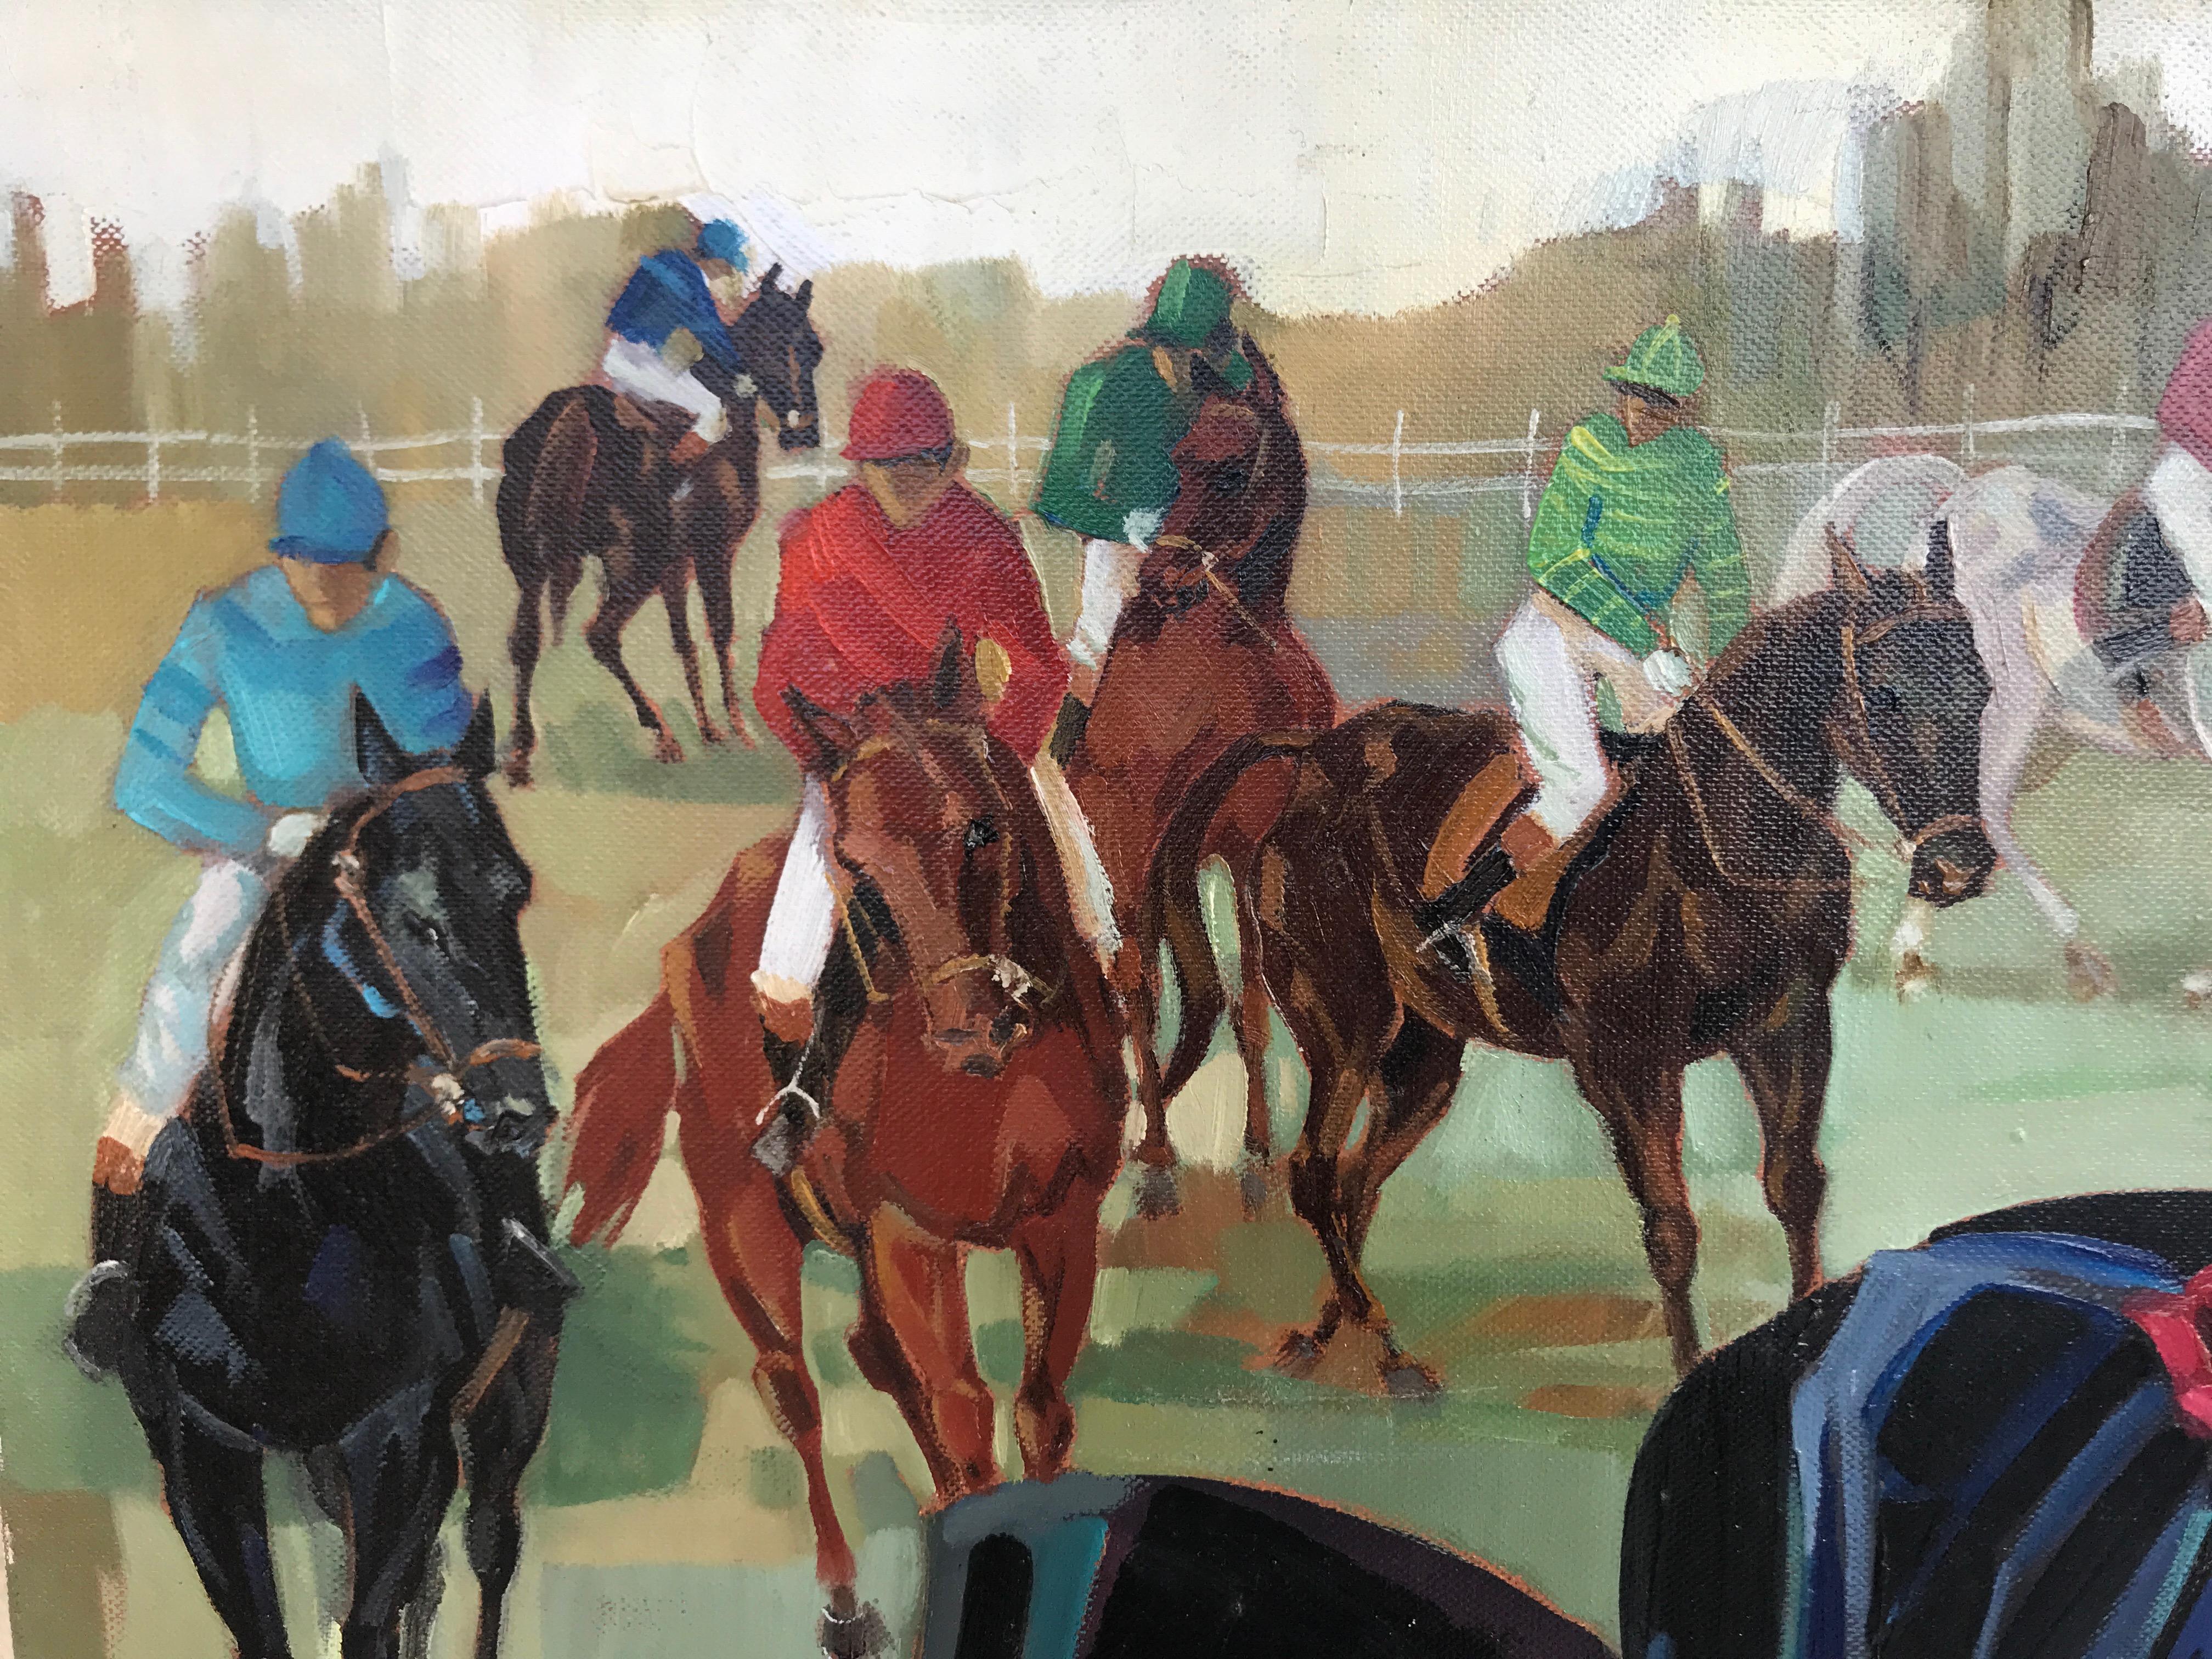 Before The Horse Race. Jori Duran expressionist high society sport scene 2